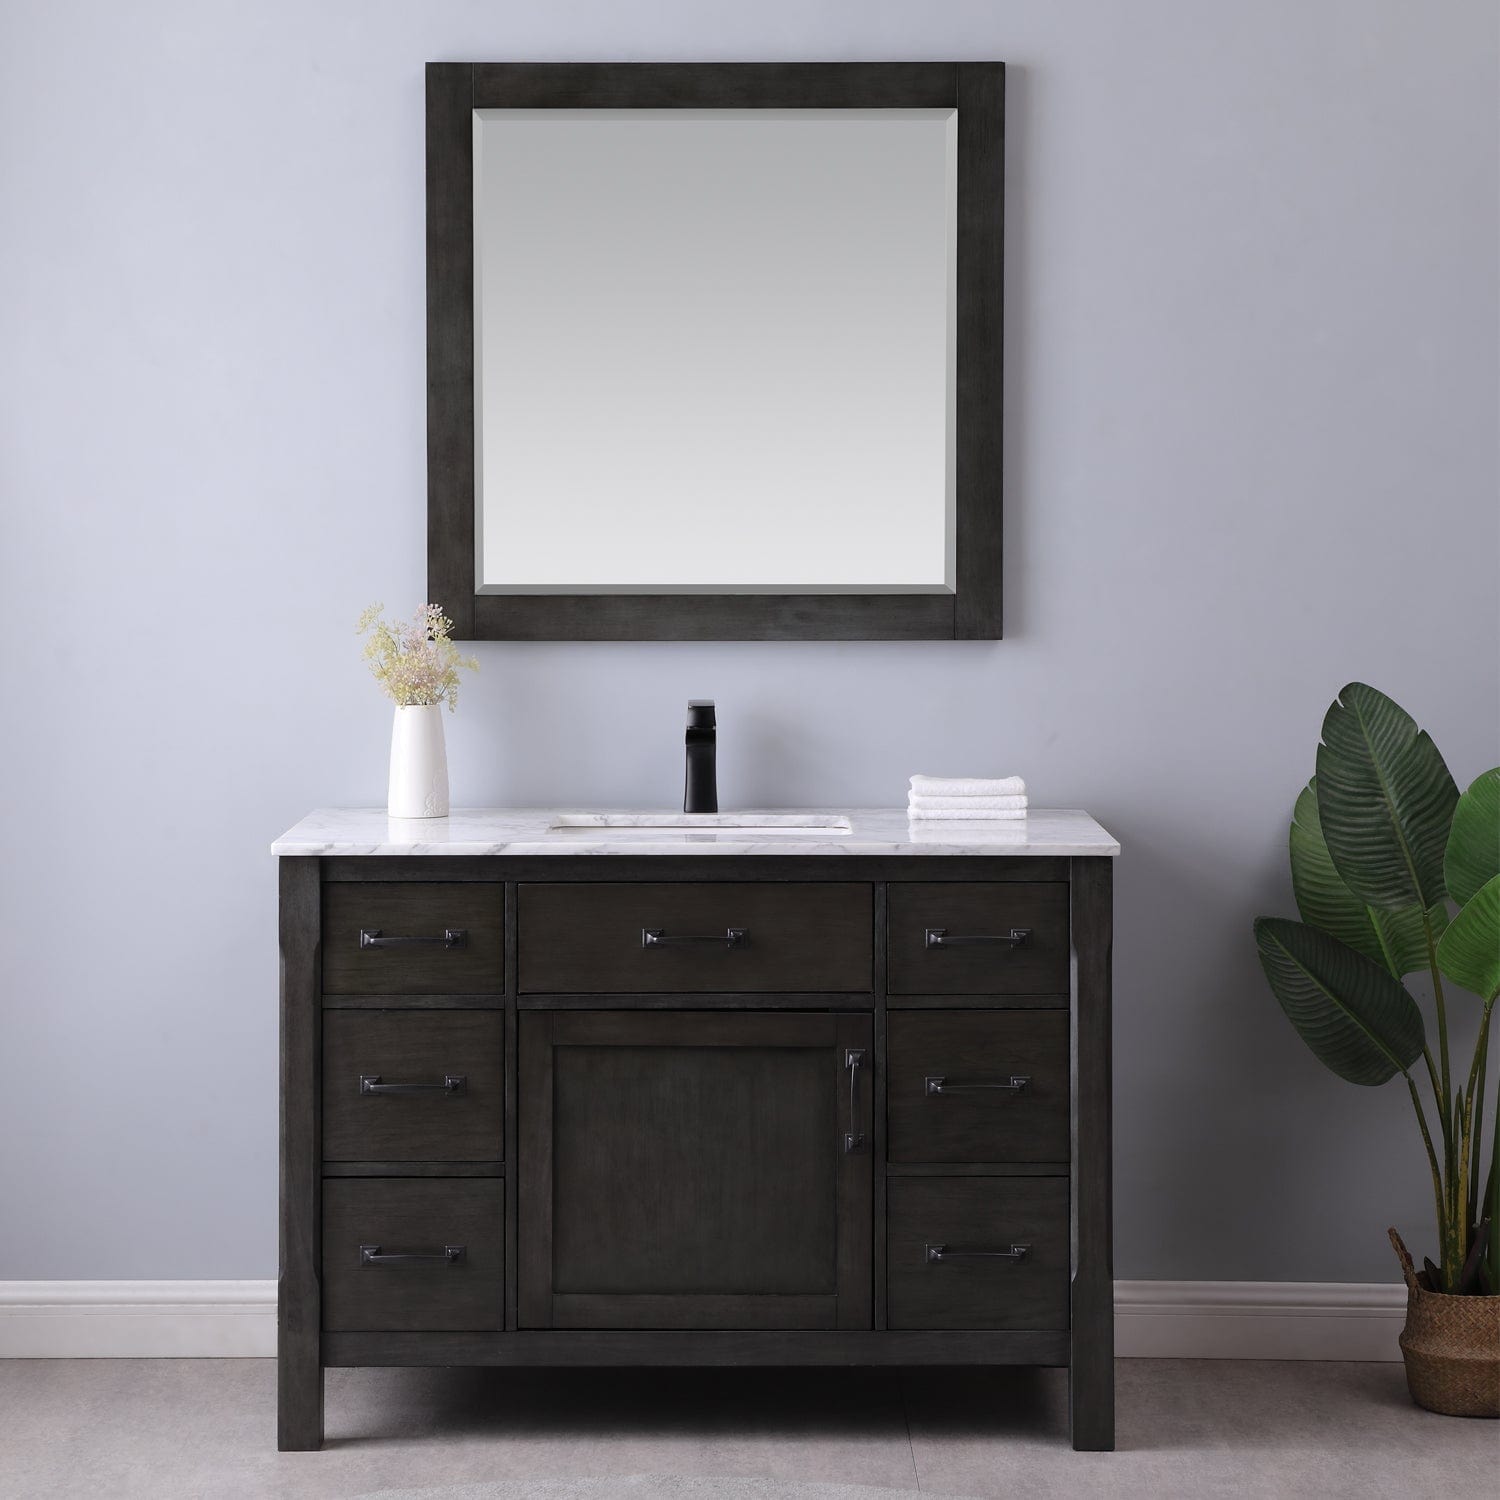 Altair Maribella 48" Single Bathroom Vanity Set in Rust Black and Carrara White Marble Countertop with Mirror 535048-RL-CA - Molaix631112970310Vanity535048-RL-CA